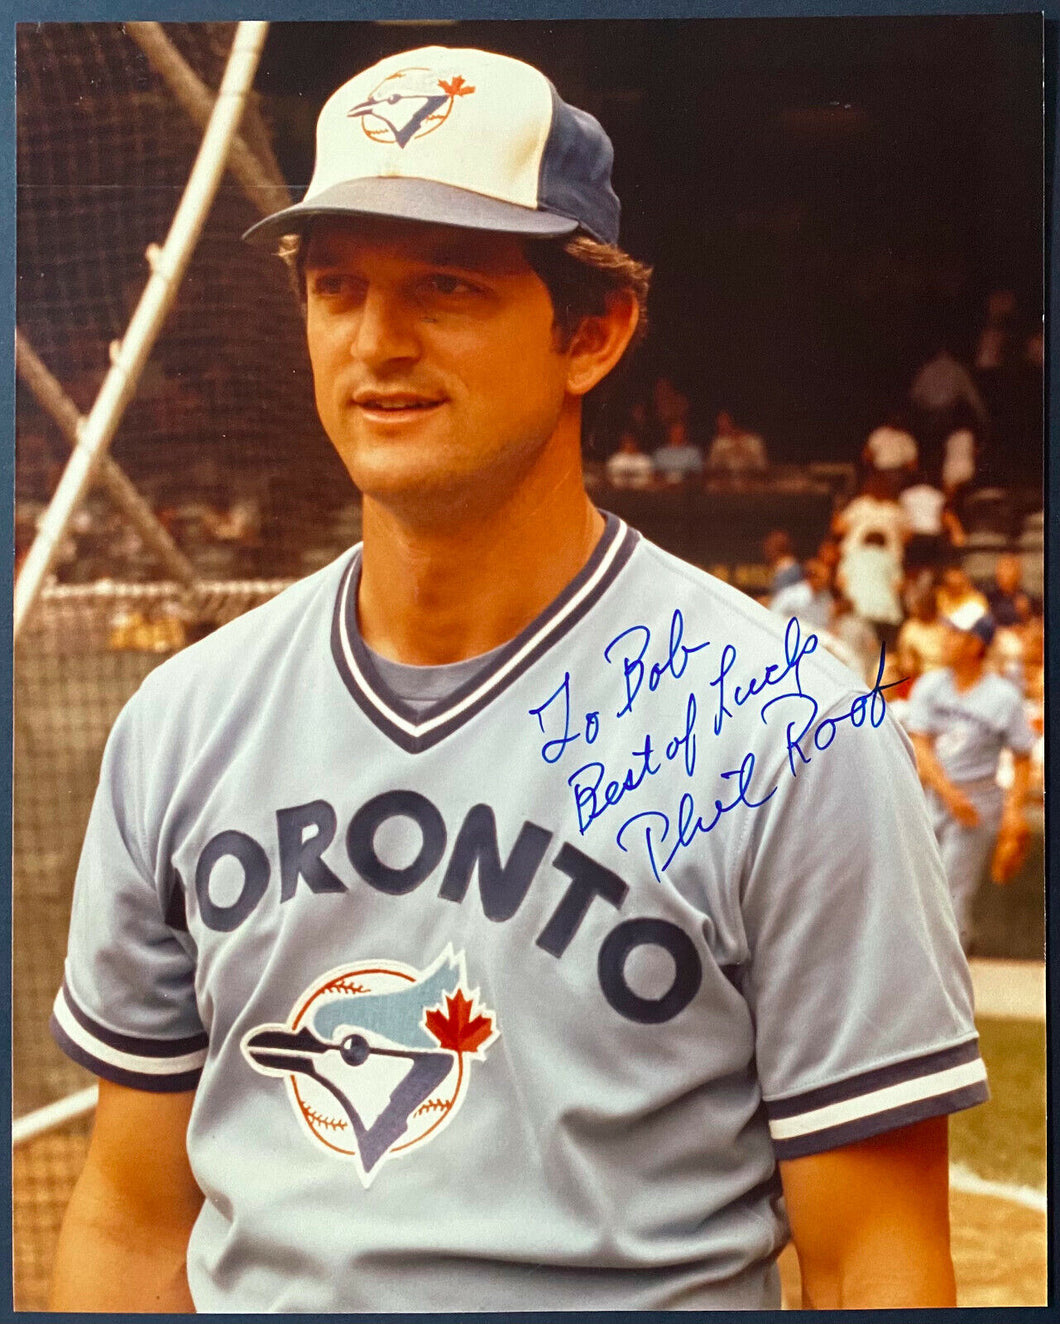 1977 Toronto Blue Jays Phil Roof Signed Autographed Photo MLB Baseball